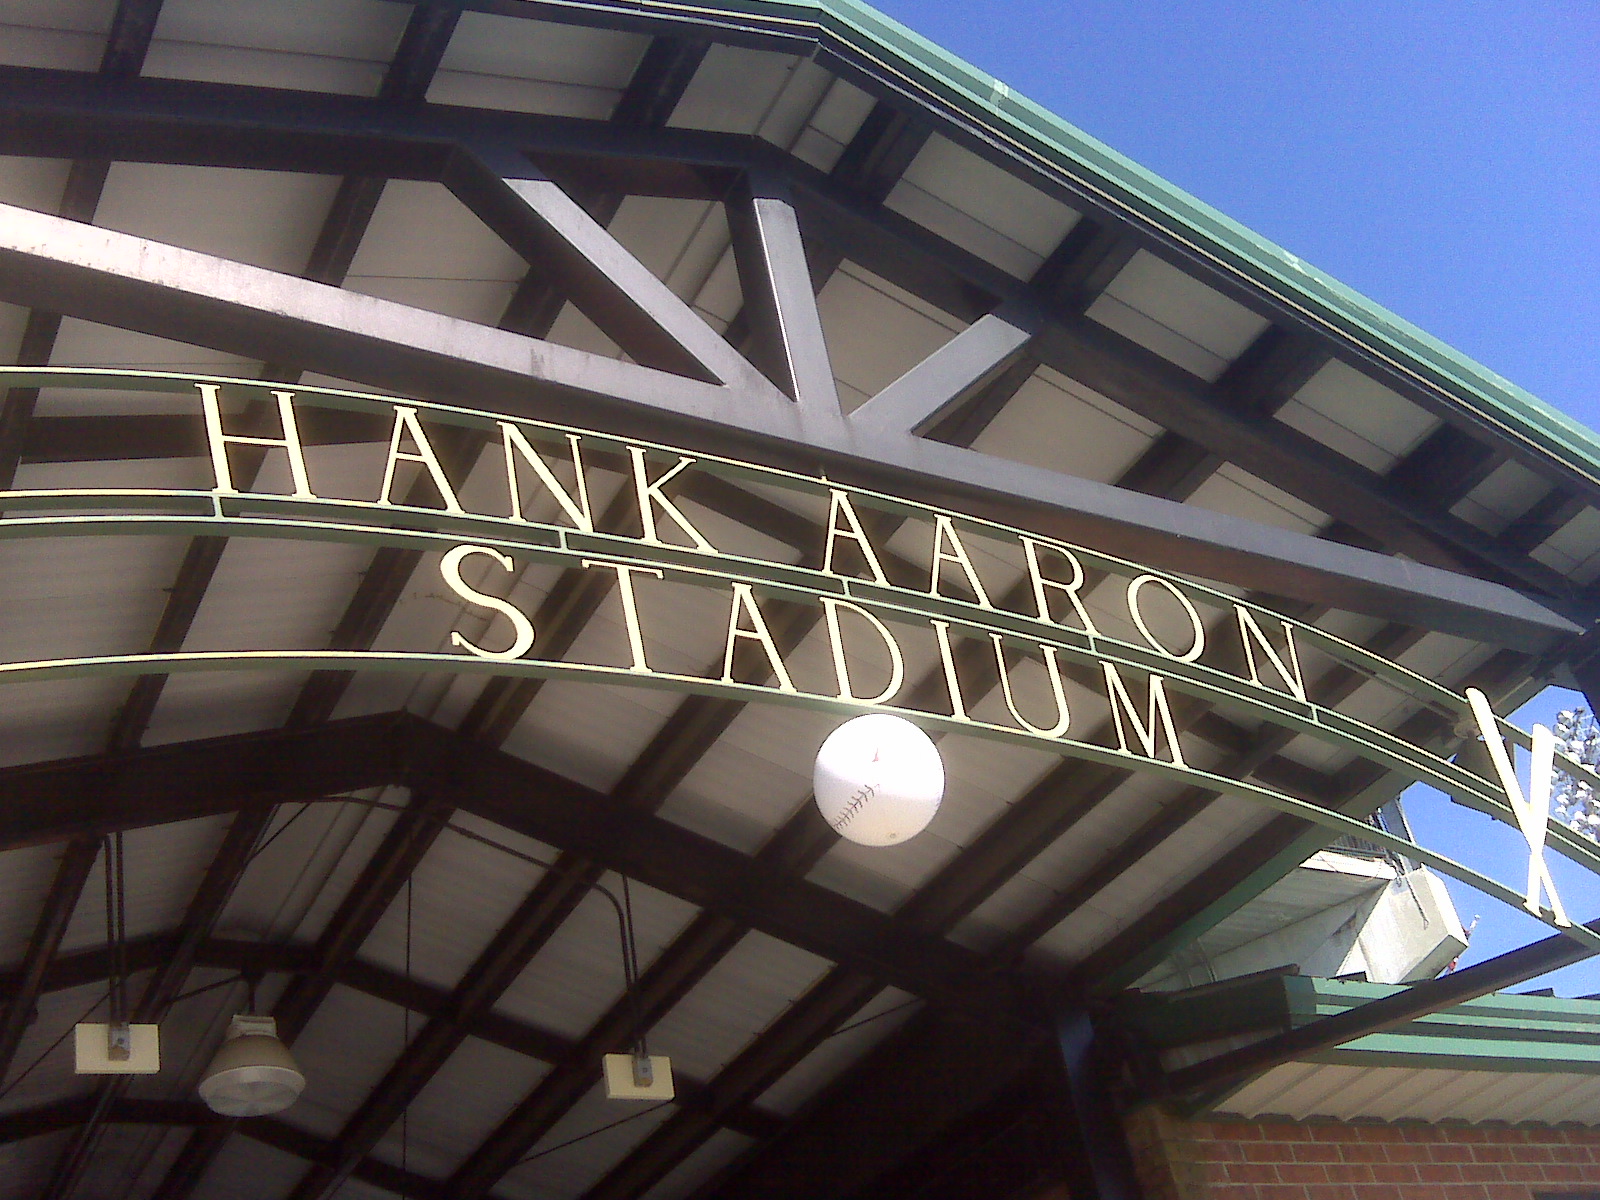 What’s Next For Mobile’s Hank Aaron Stadium?